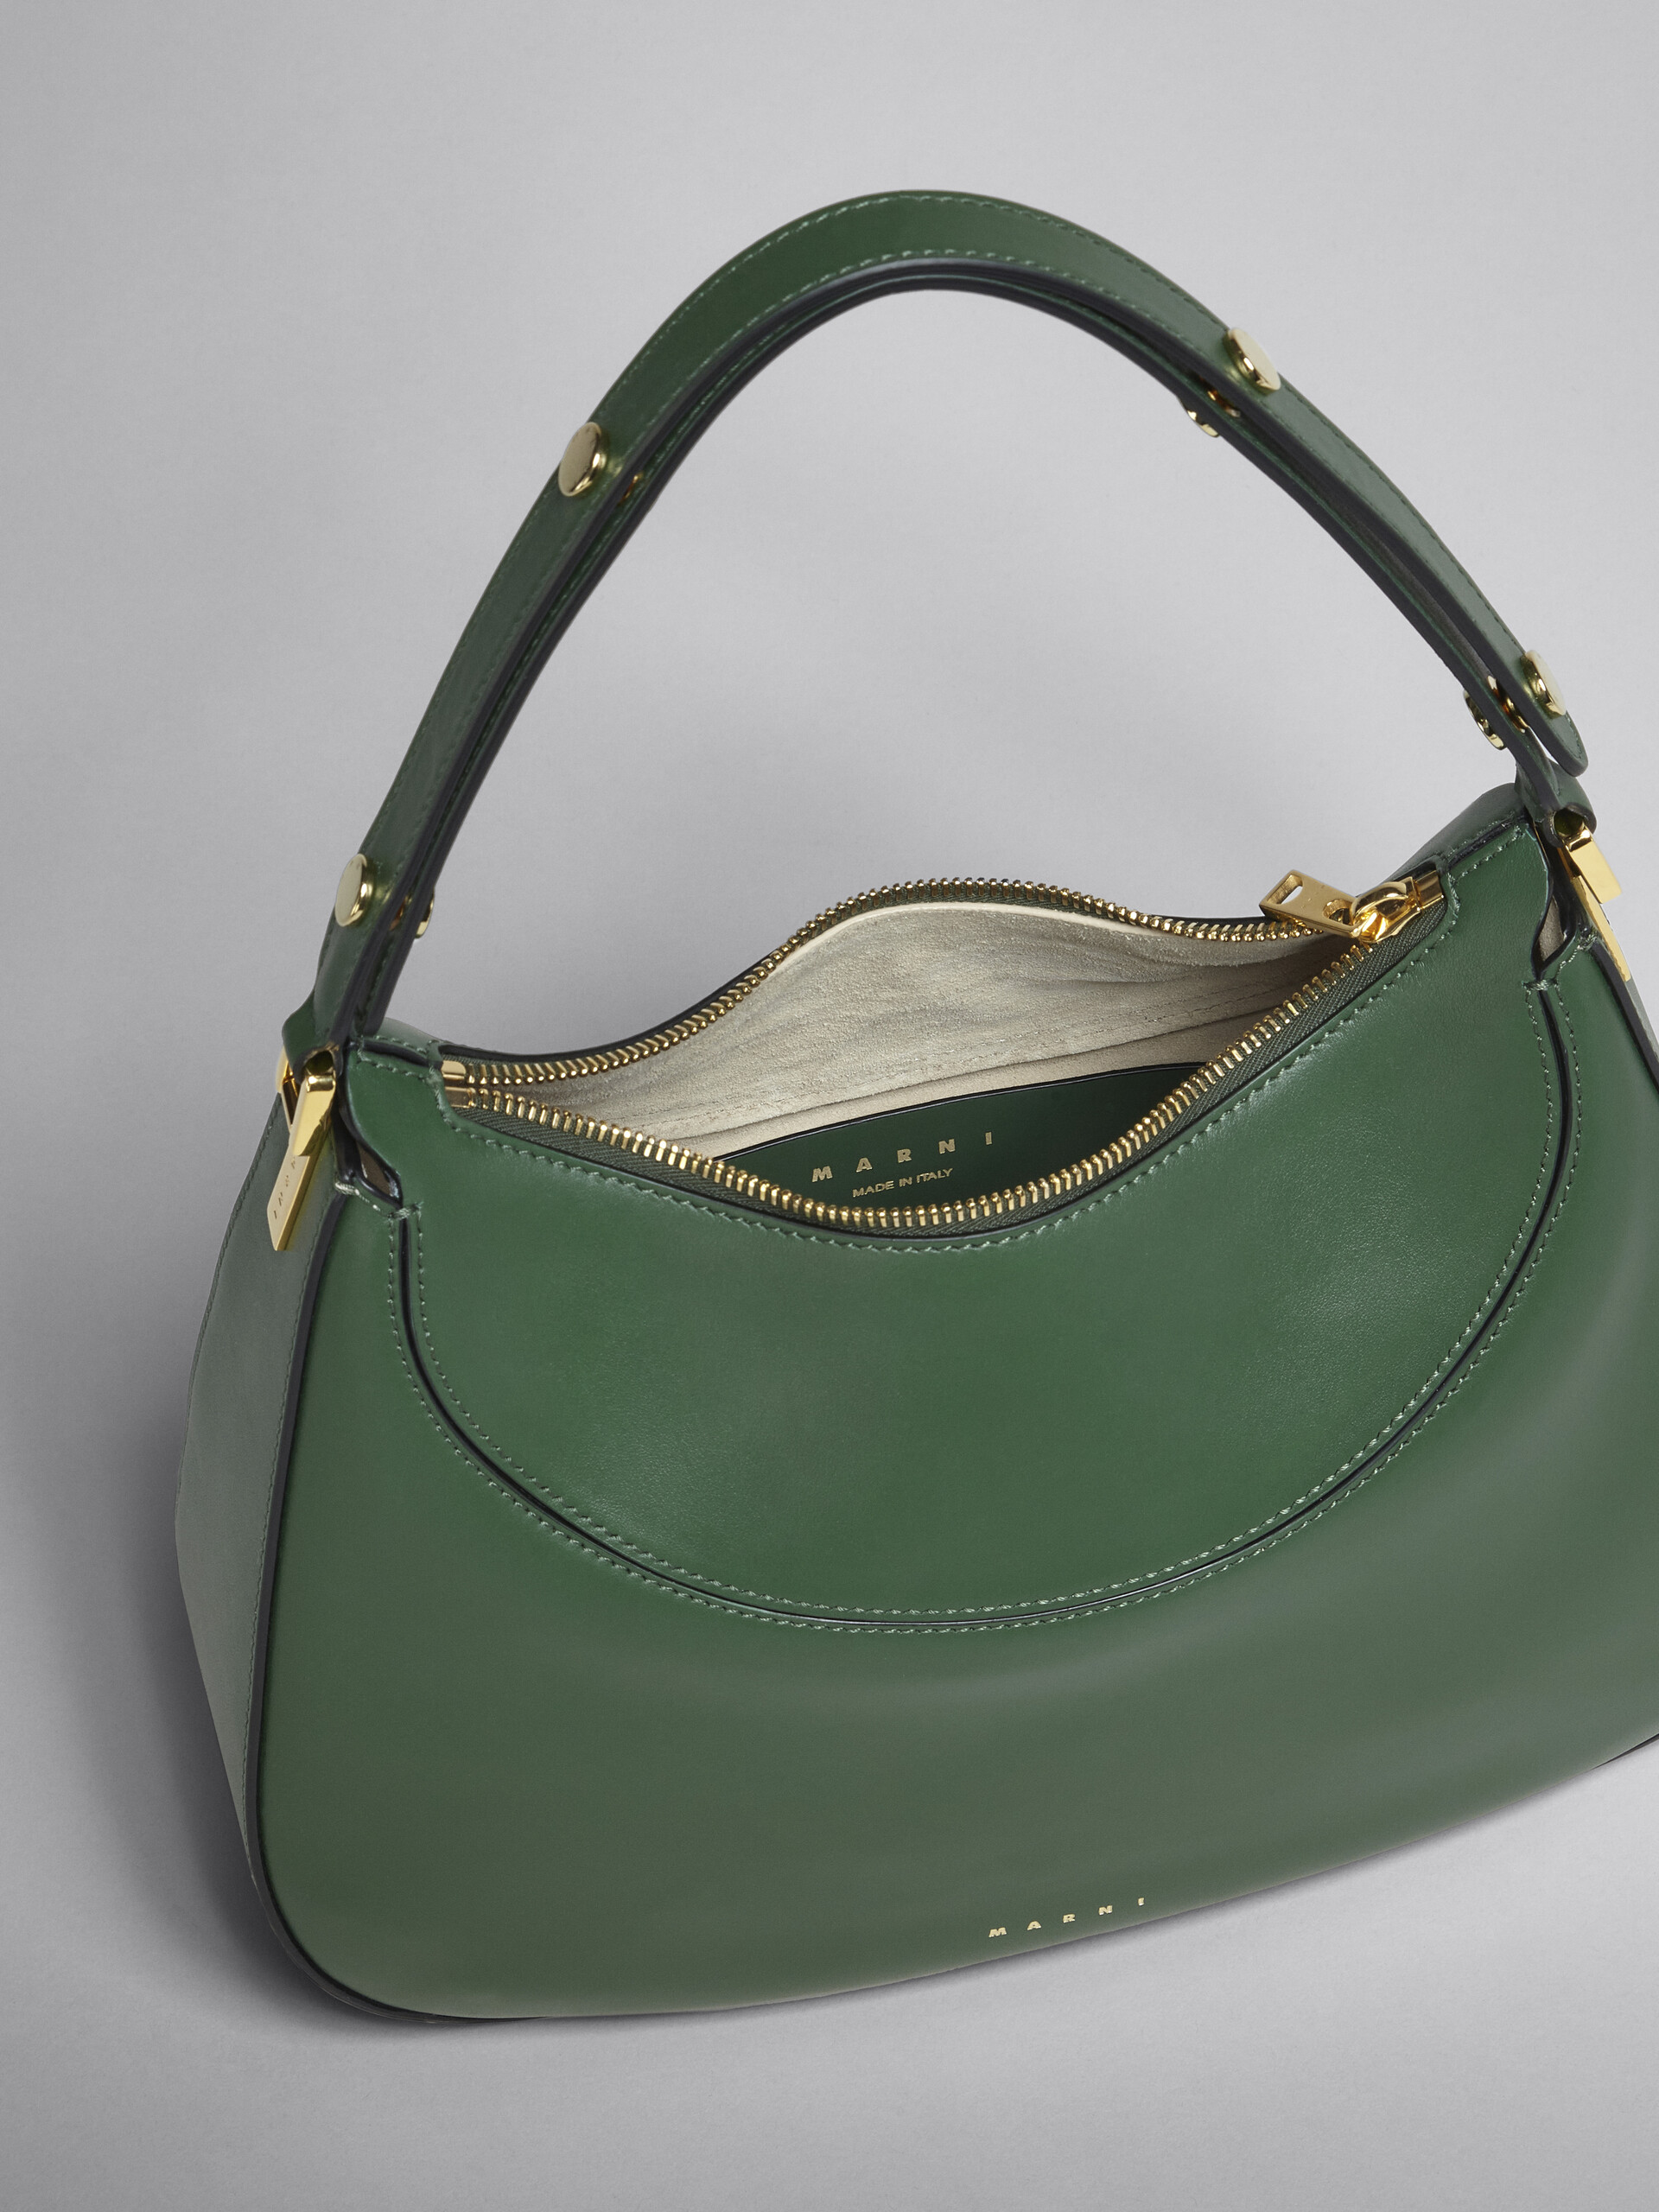 Milano large bag in green leather - Handbag - Image 4